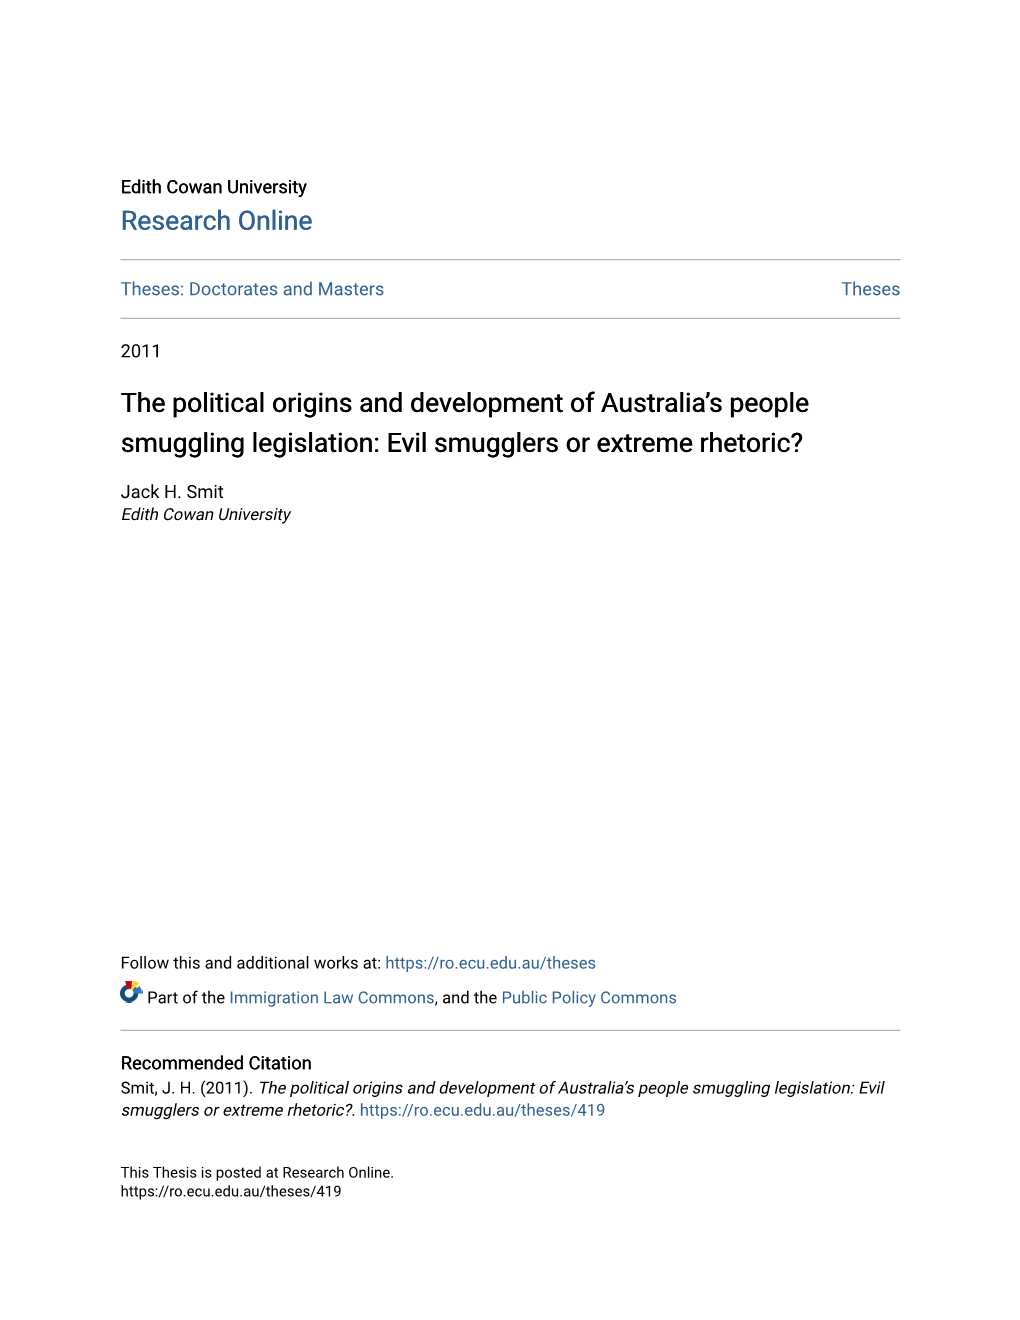 The Political Origins and Development of Australia’S People Smuggling Legislation: Evil Smugglers Or Extreme Rhetoric?